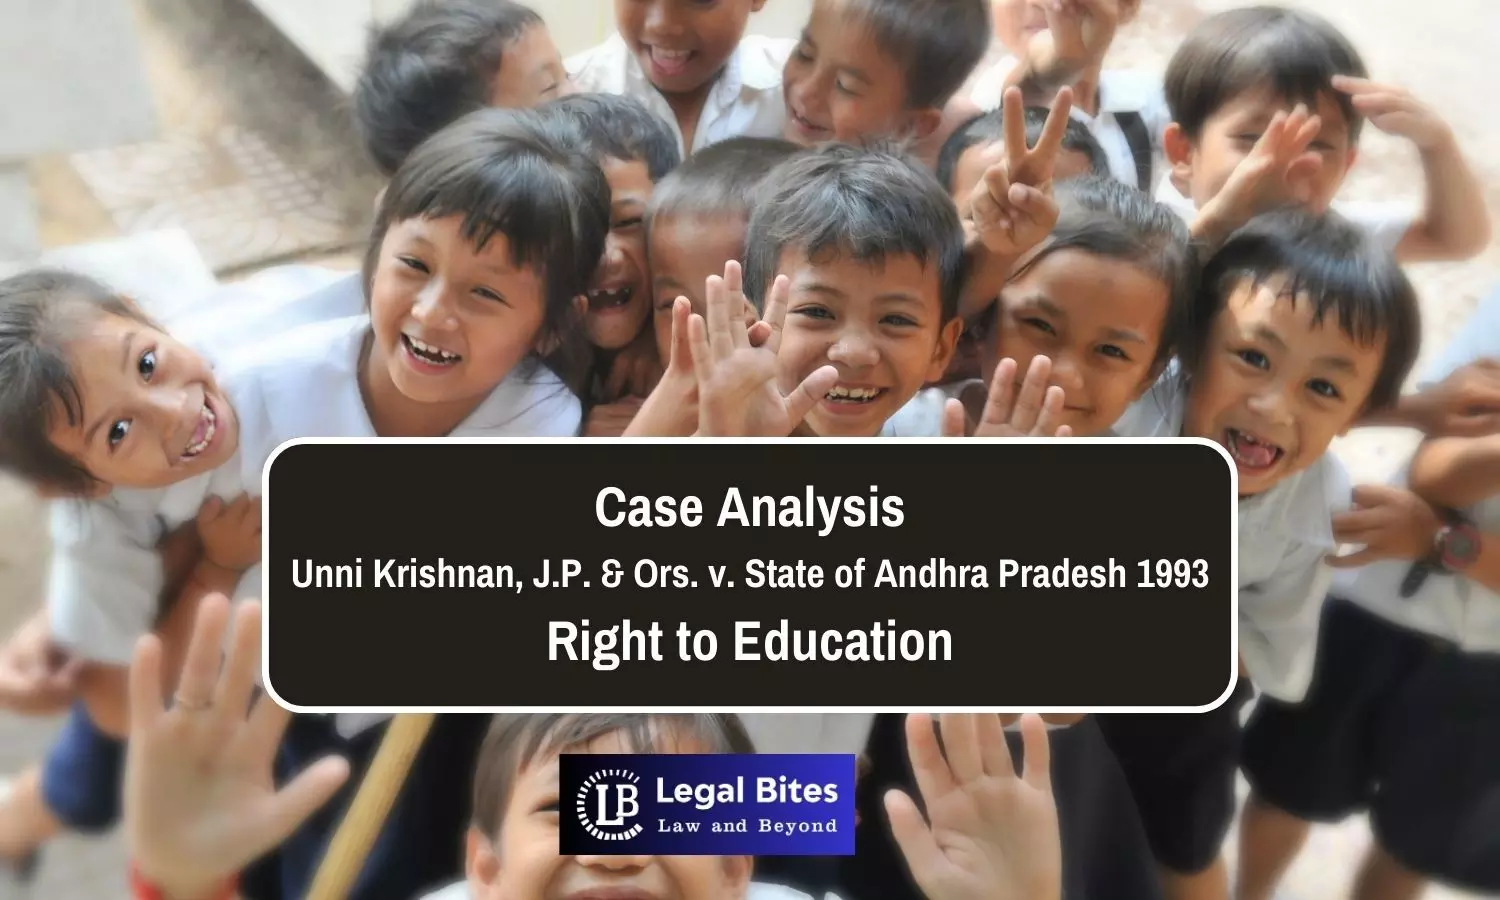 Case Analysis: Unni Krishnan, J.P. & Ors. v. State of Andhra Pradesh 1993 | Right to Education